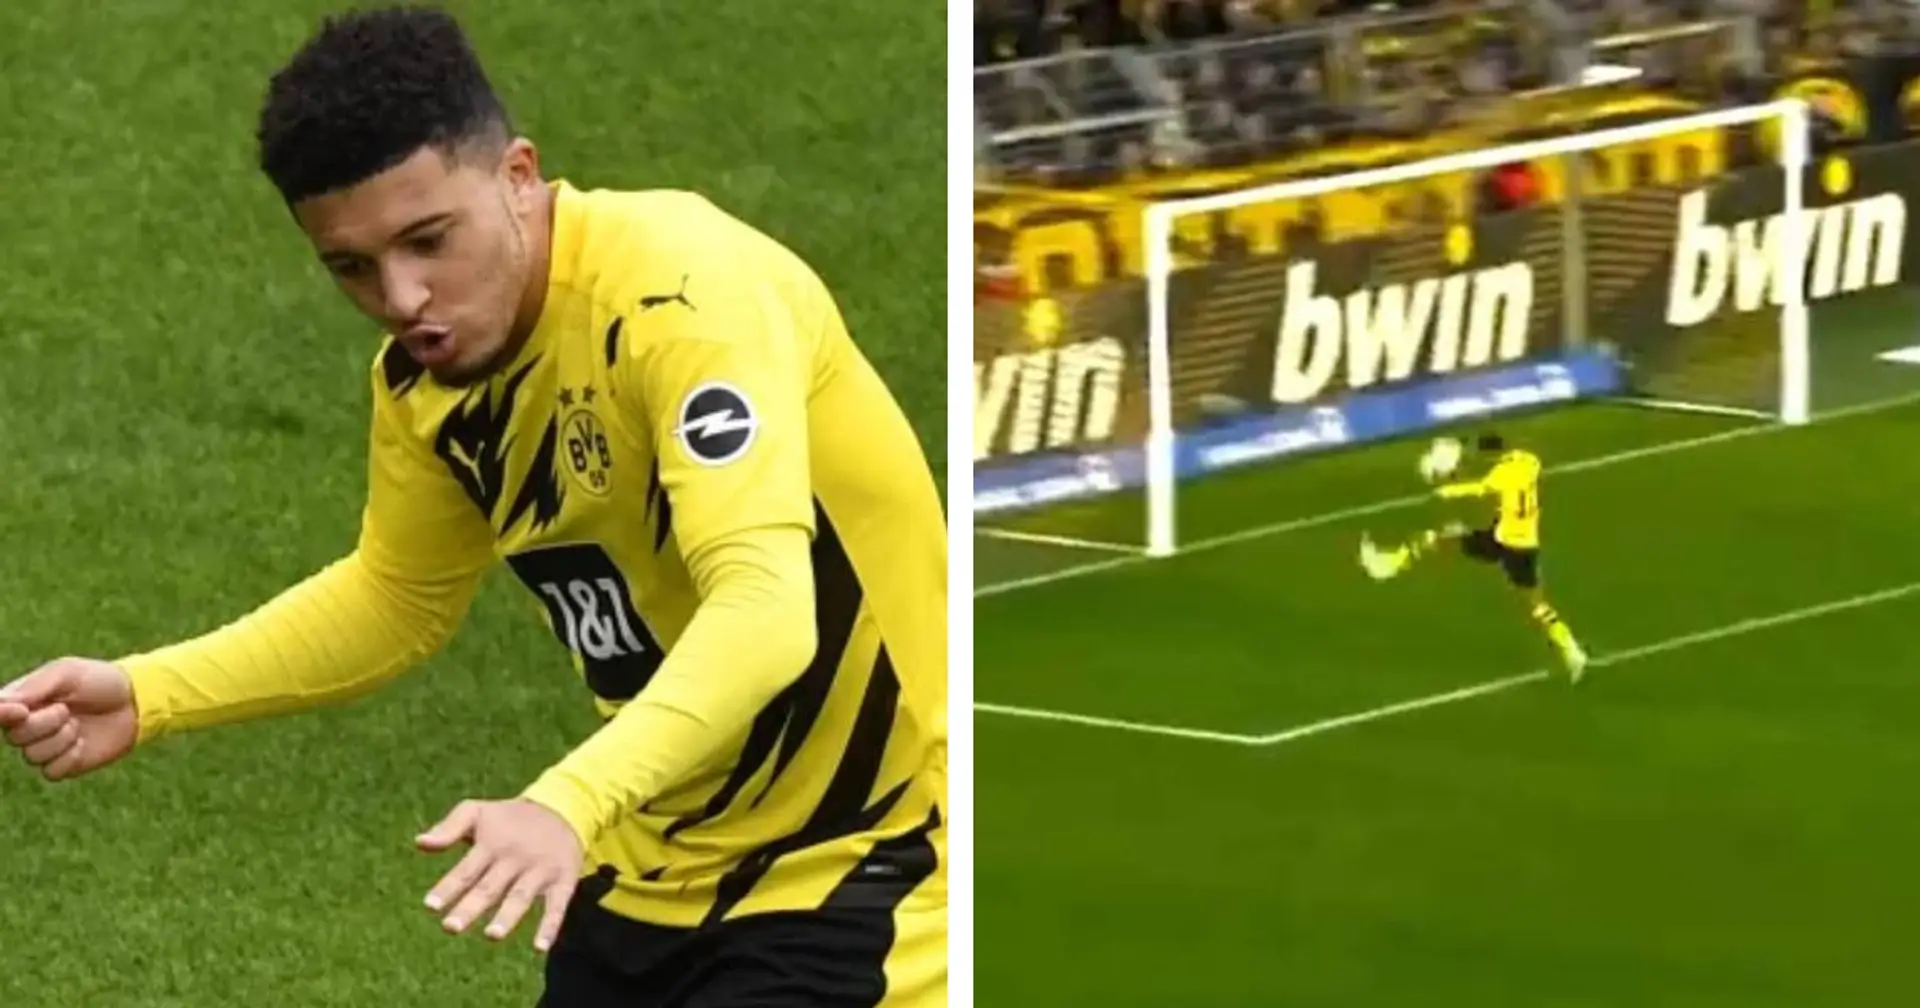 Jadon Sancho misses 3 big chances in 2 mins for Borussia Dortmund — including open goal